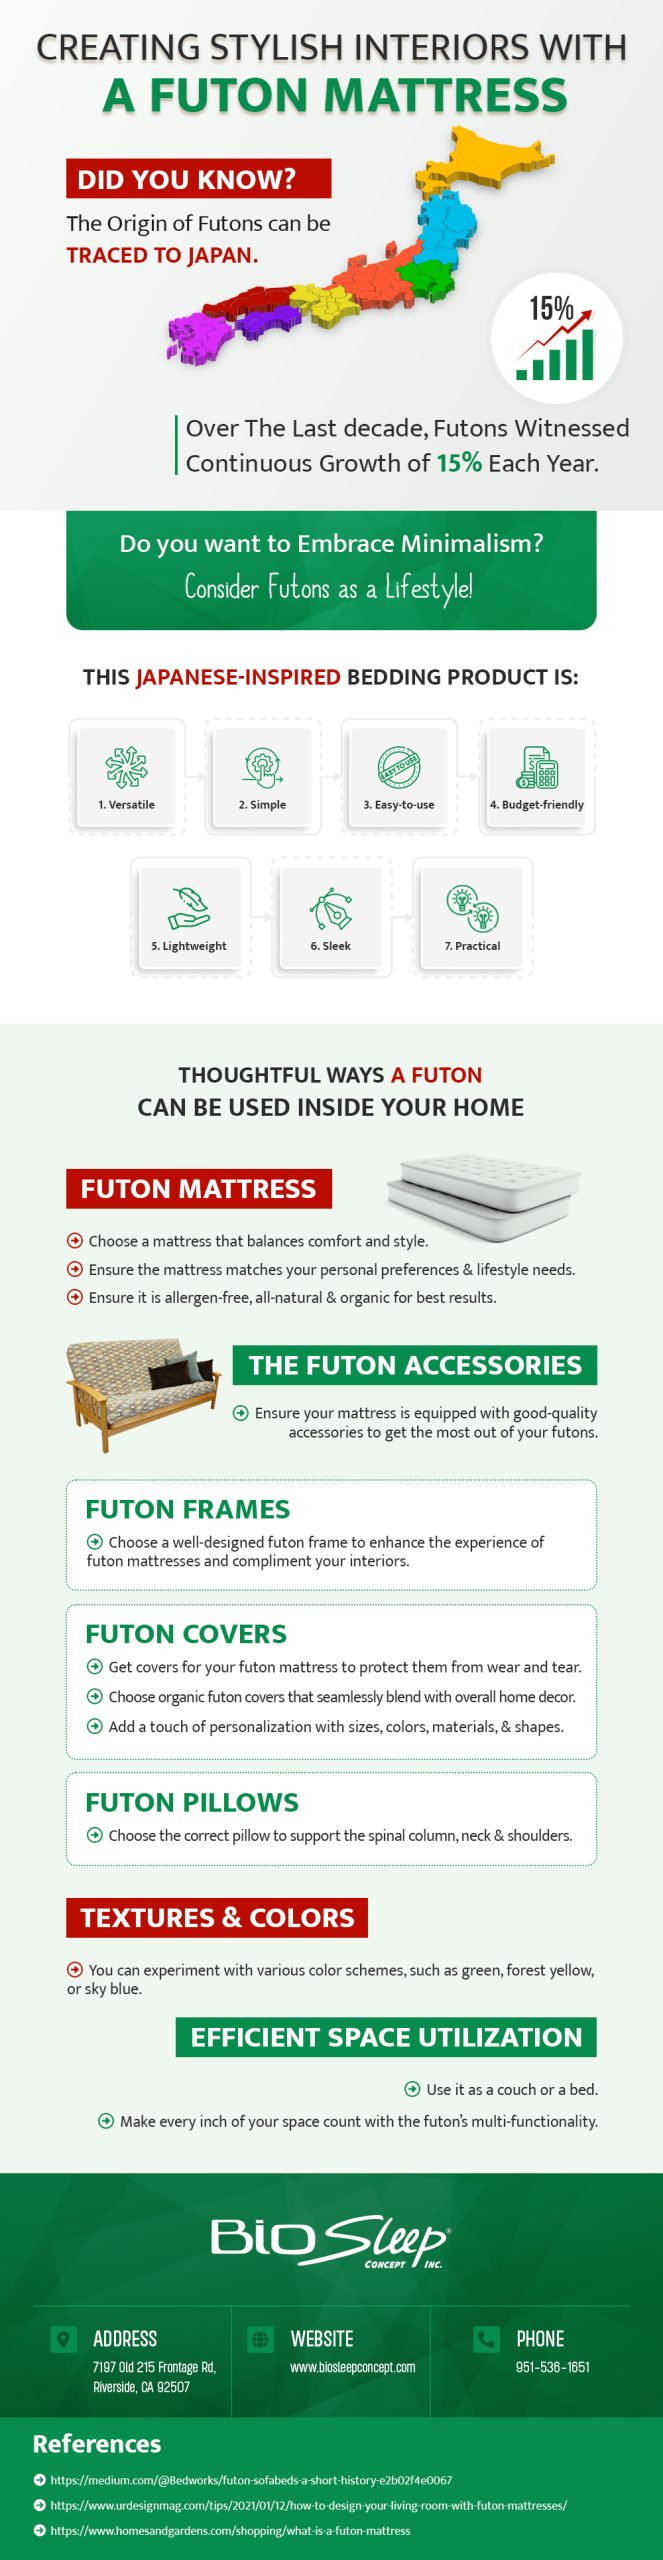 Creative and Thoughtful Ways to Incorporate A Futon Mattress - Infographic Futon Mattress